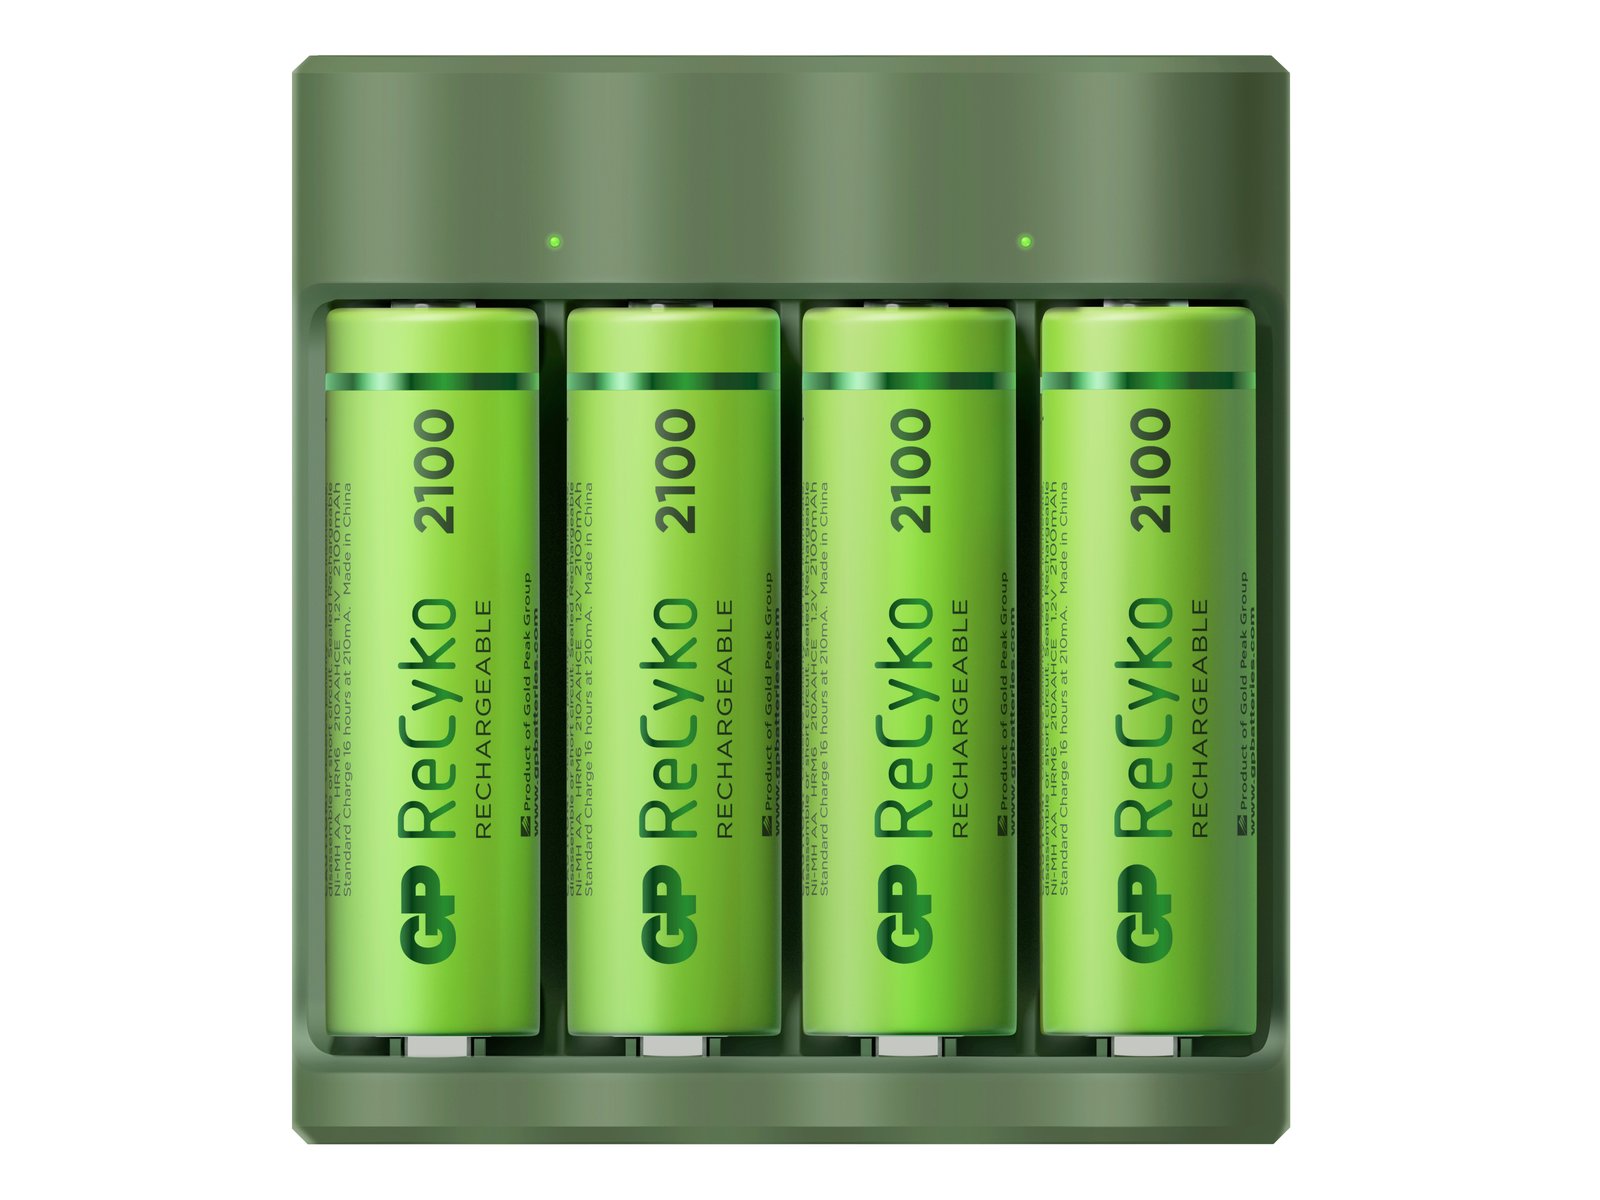 GP Batteries ReCyko Everyday Batteriladdare B421 USB  1 st